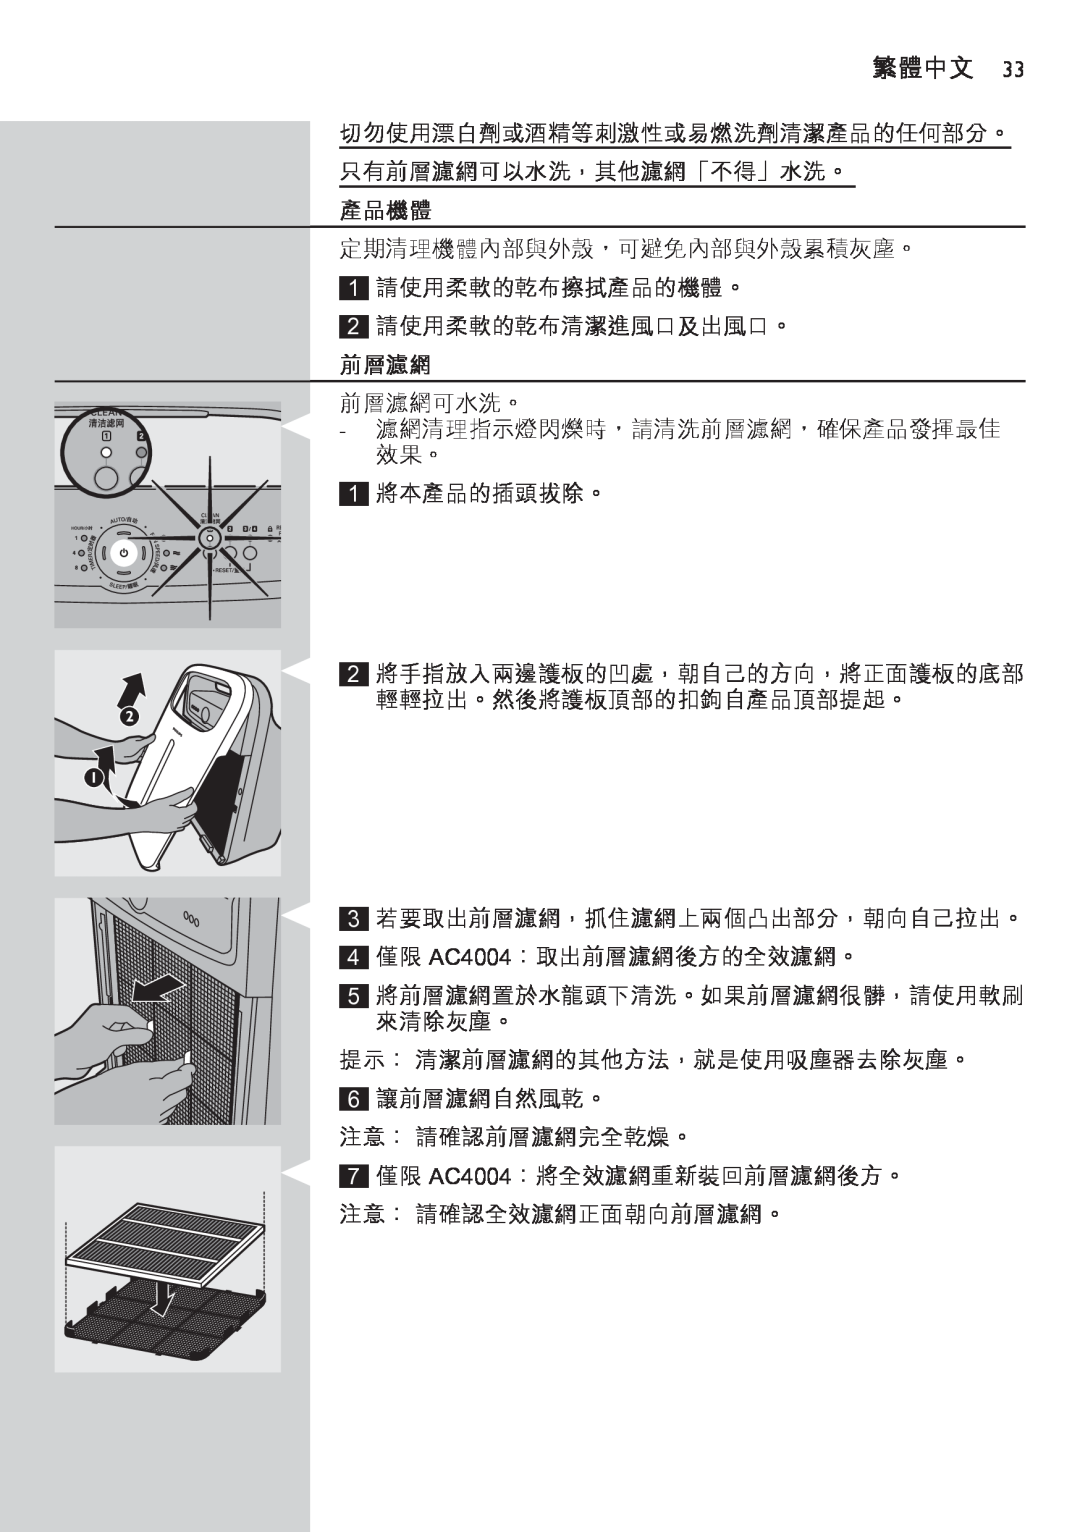 Philips AC4002 manual 產品機體, 前層濾網, 繁體中文 